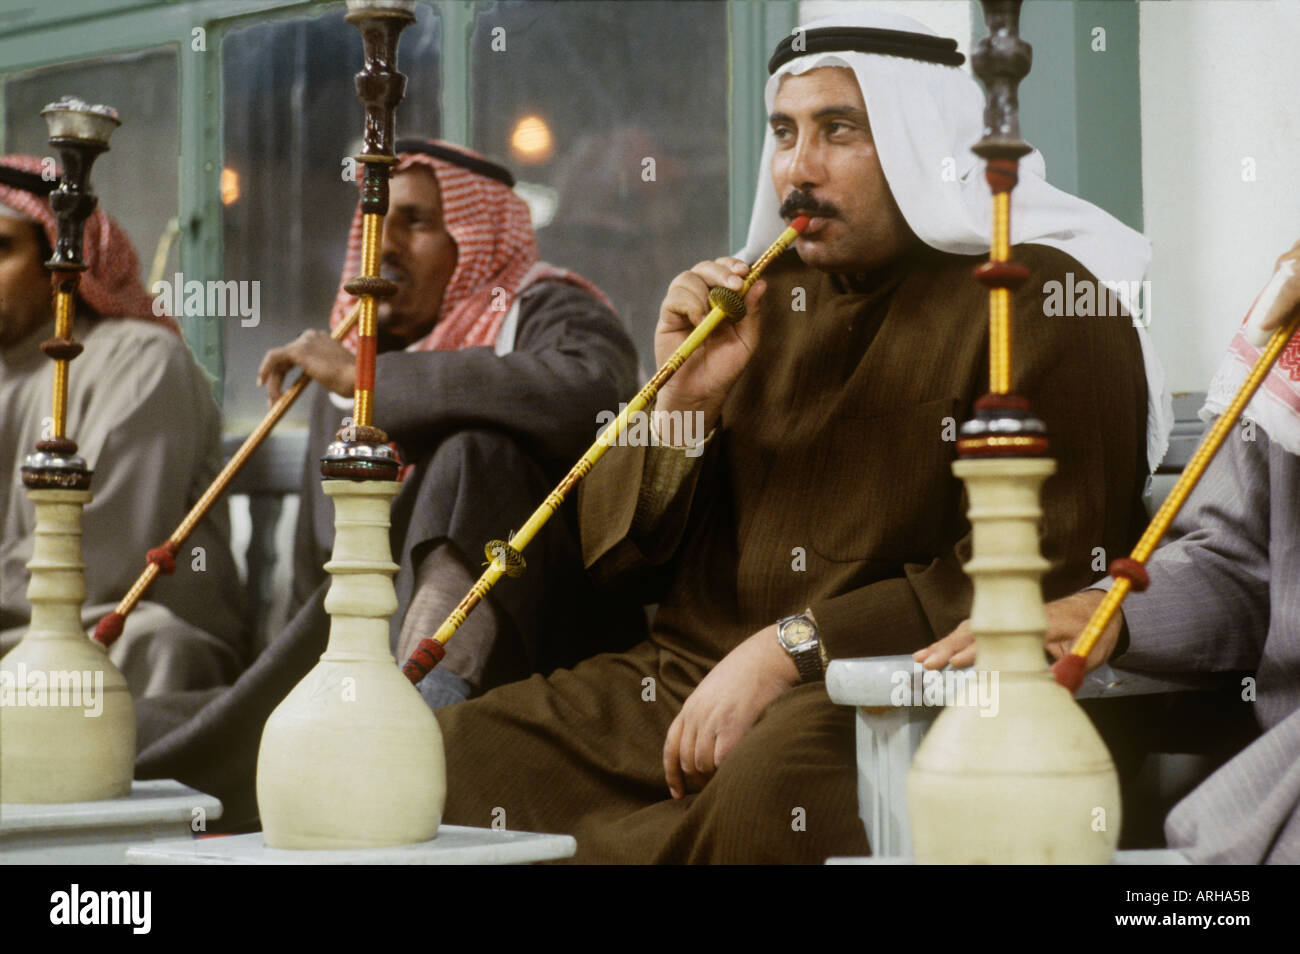 Men smoking hookahs in a cafe in Kuwait Stock Photo